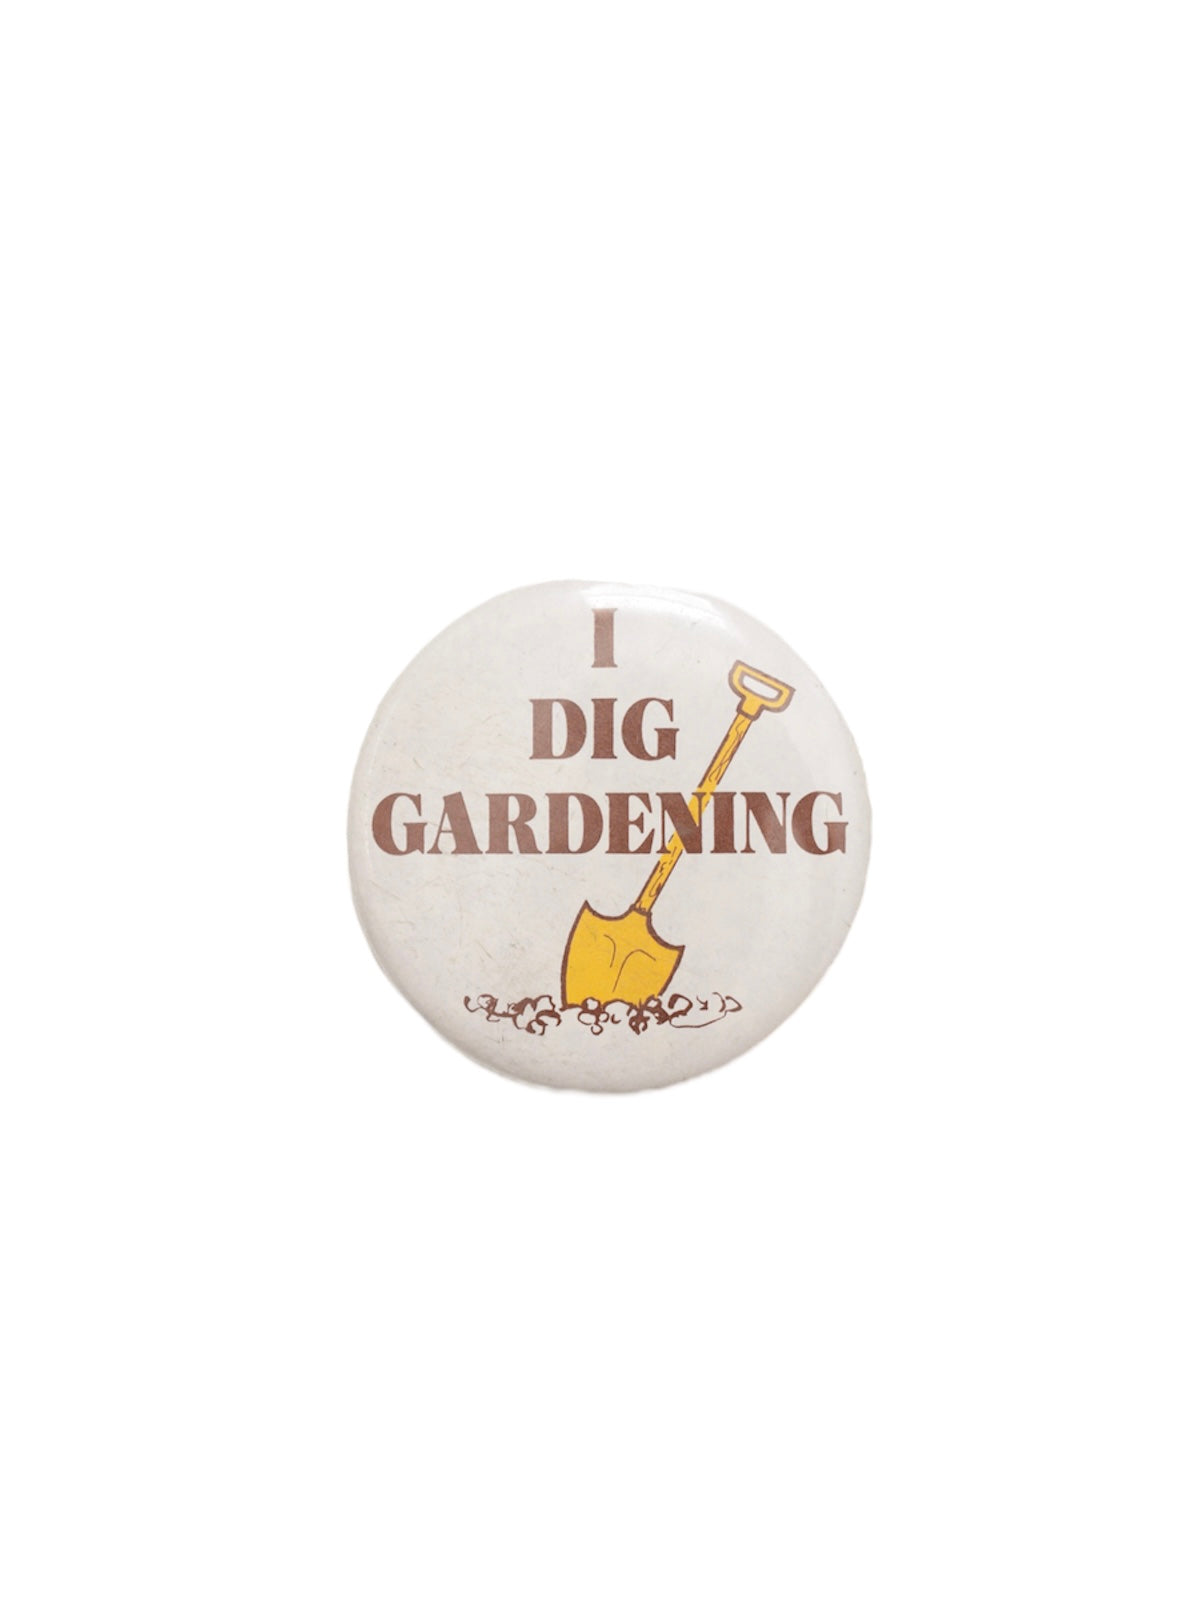 I Dig Gardening Pin